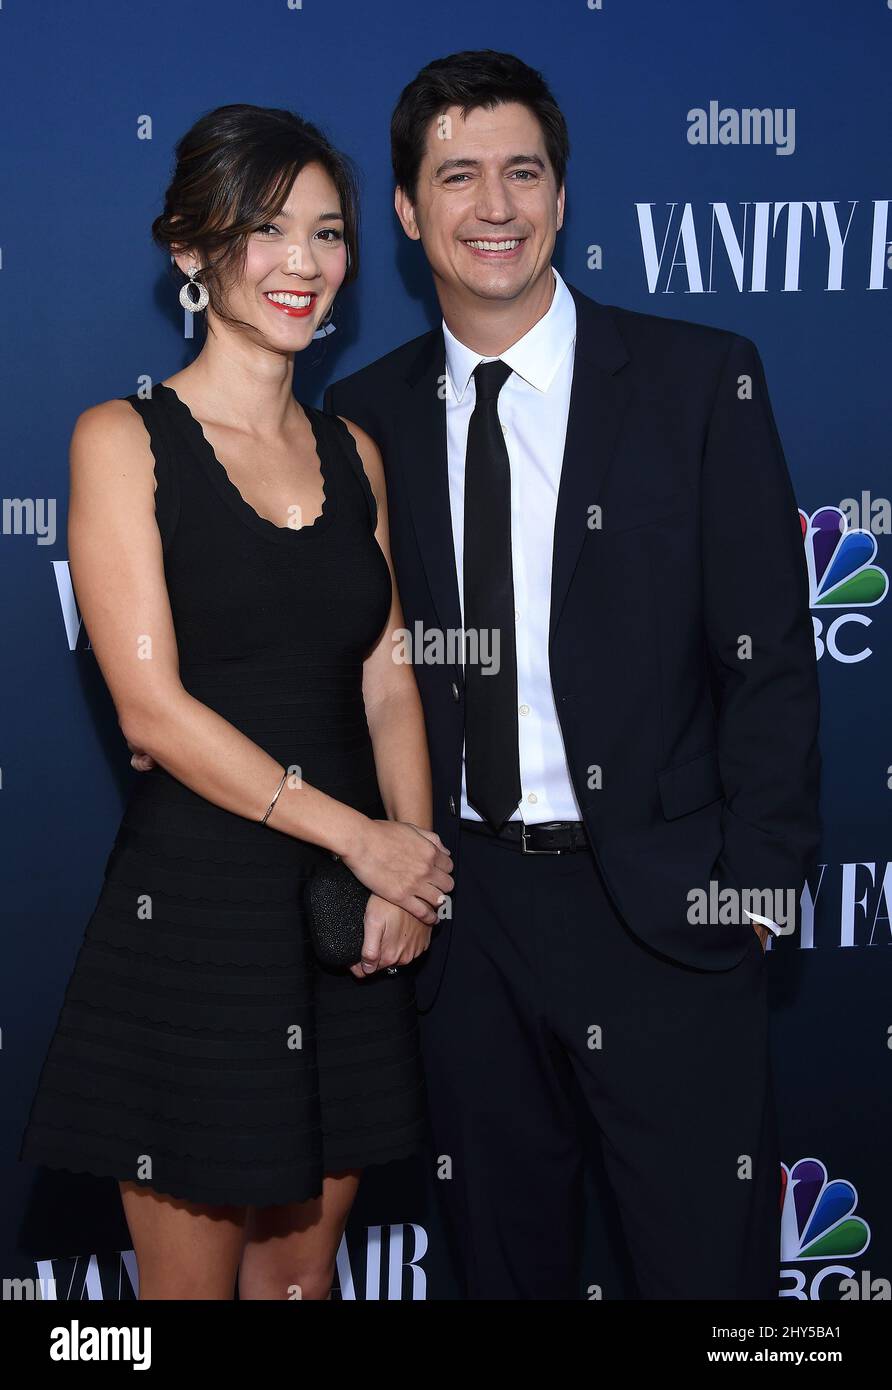 Ken Marino & Erica Oyama attending the NBC Vanity Fair 2014-2015 TV Season Red Carpet Event at the Hyde Sunset Kitchen Stock Photo